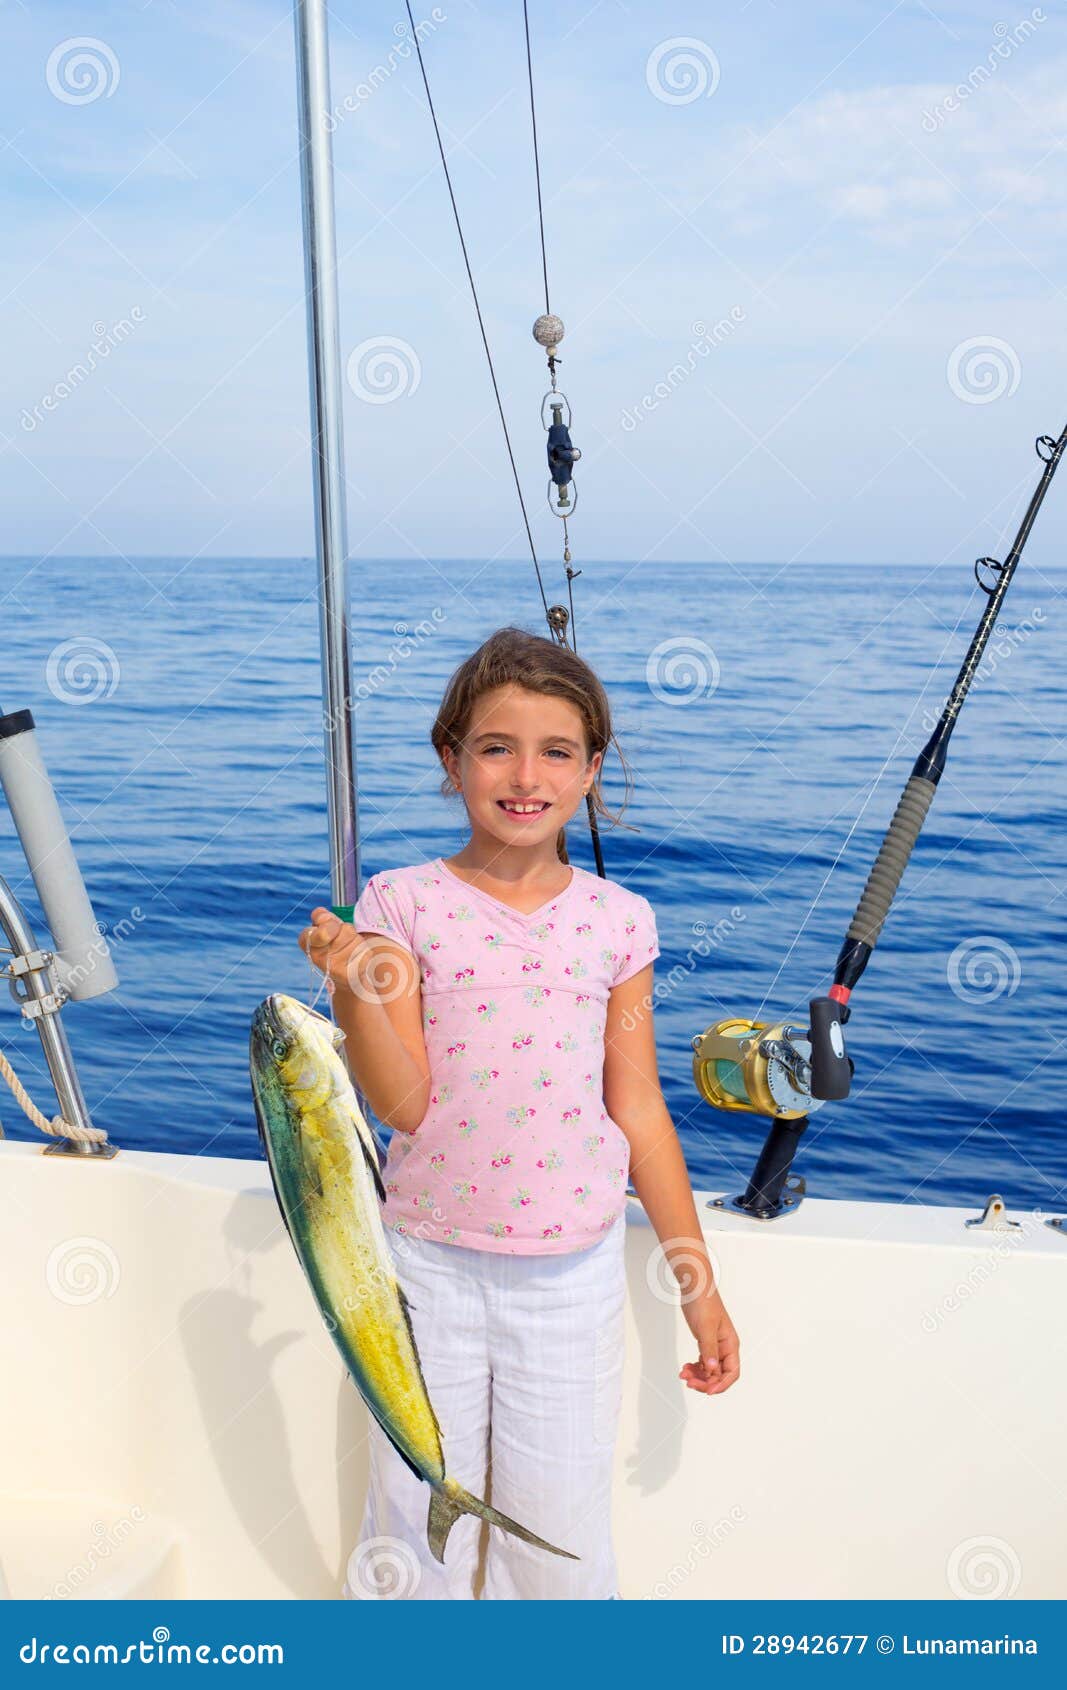 Child Girl Fishing In Boat With Mahi Mahi Dorado Fish Catch Stock Image  Image: 28942677